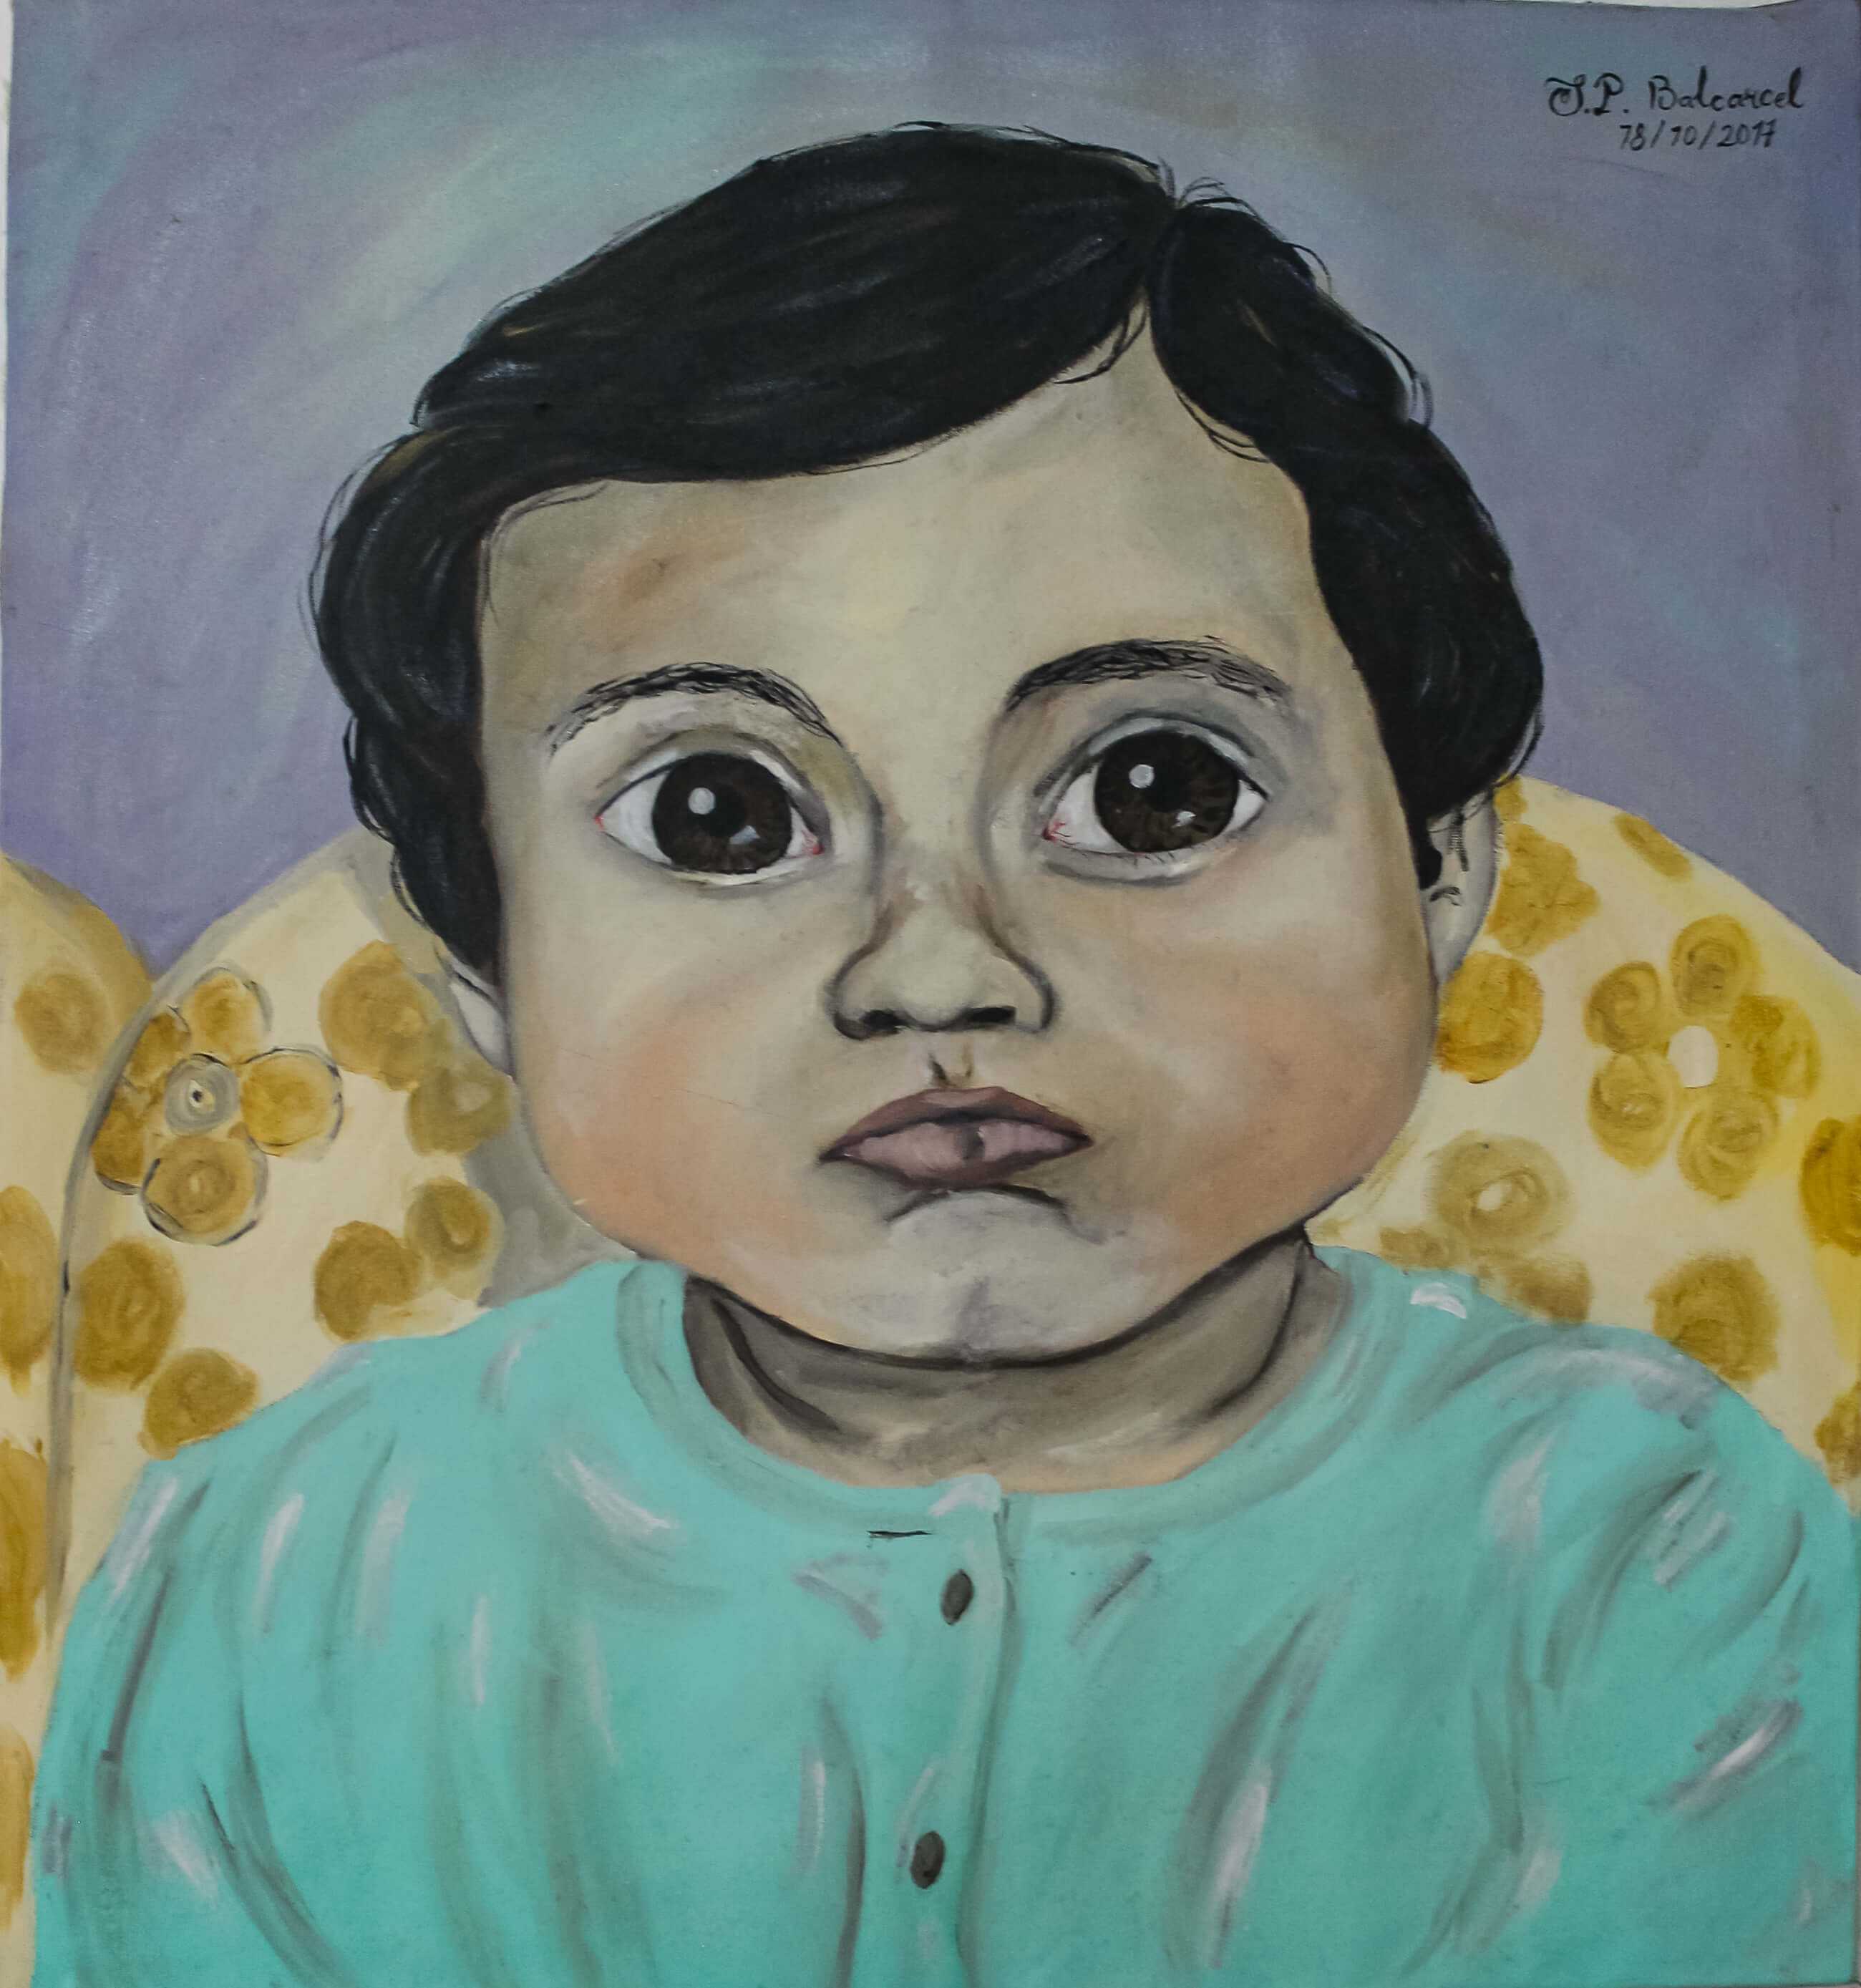 Obra de arte: Retrato de un bebé por S.P. Balcarcel. Estilo: Realismo. Técnica: Óleo sobre lienzo